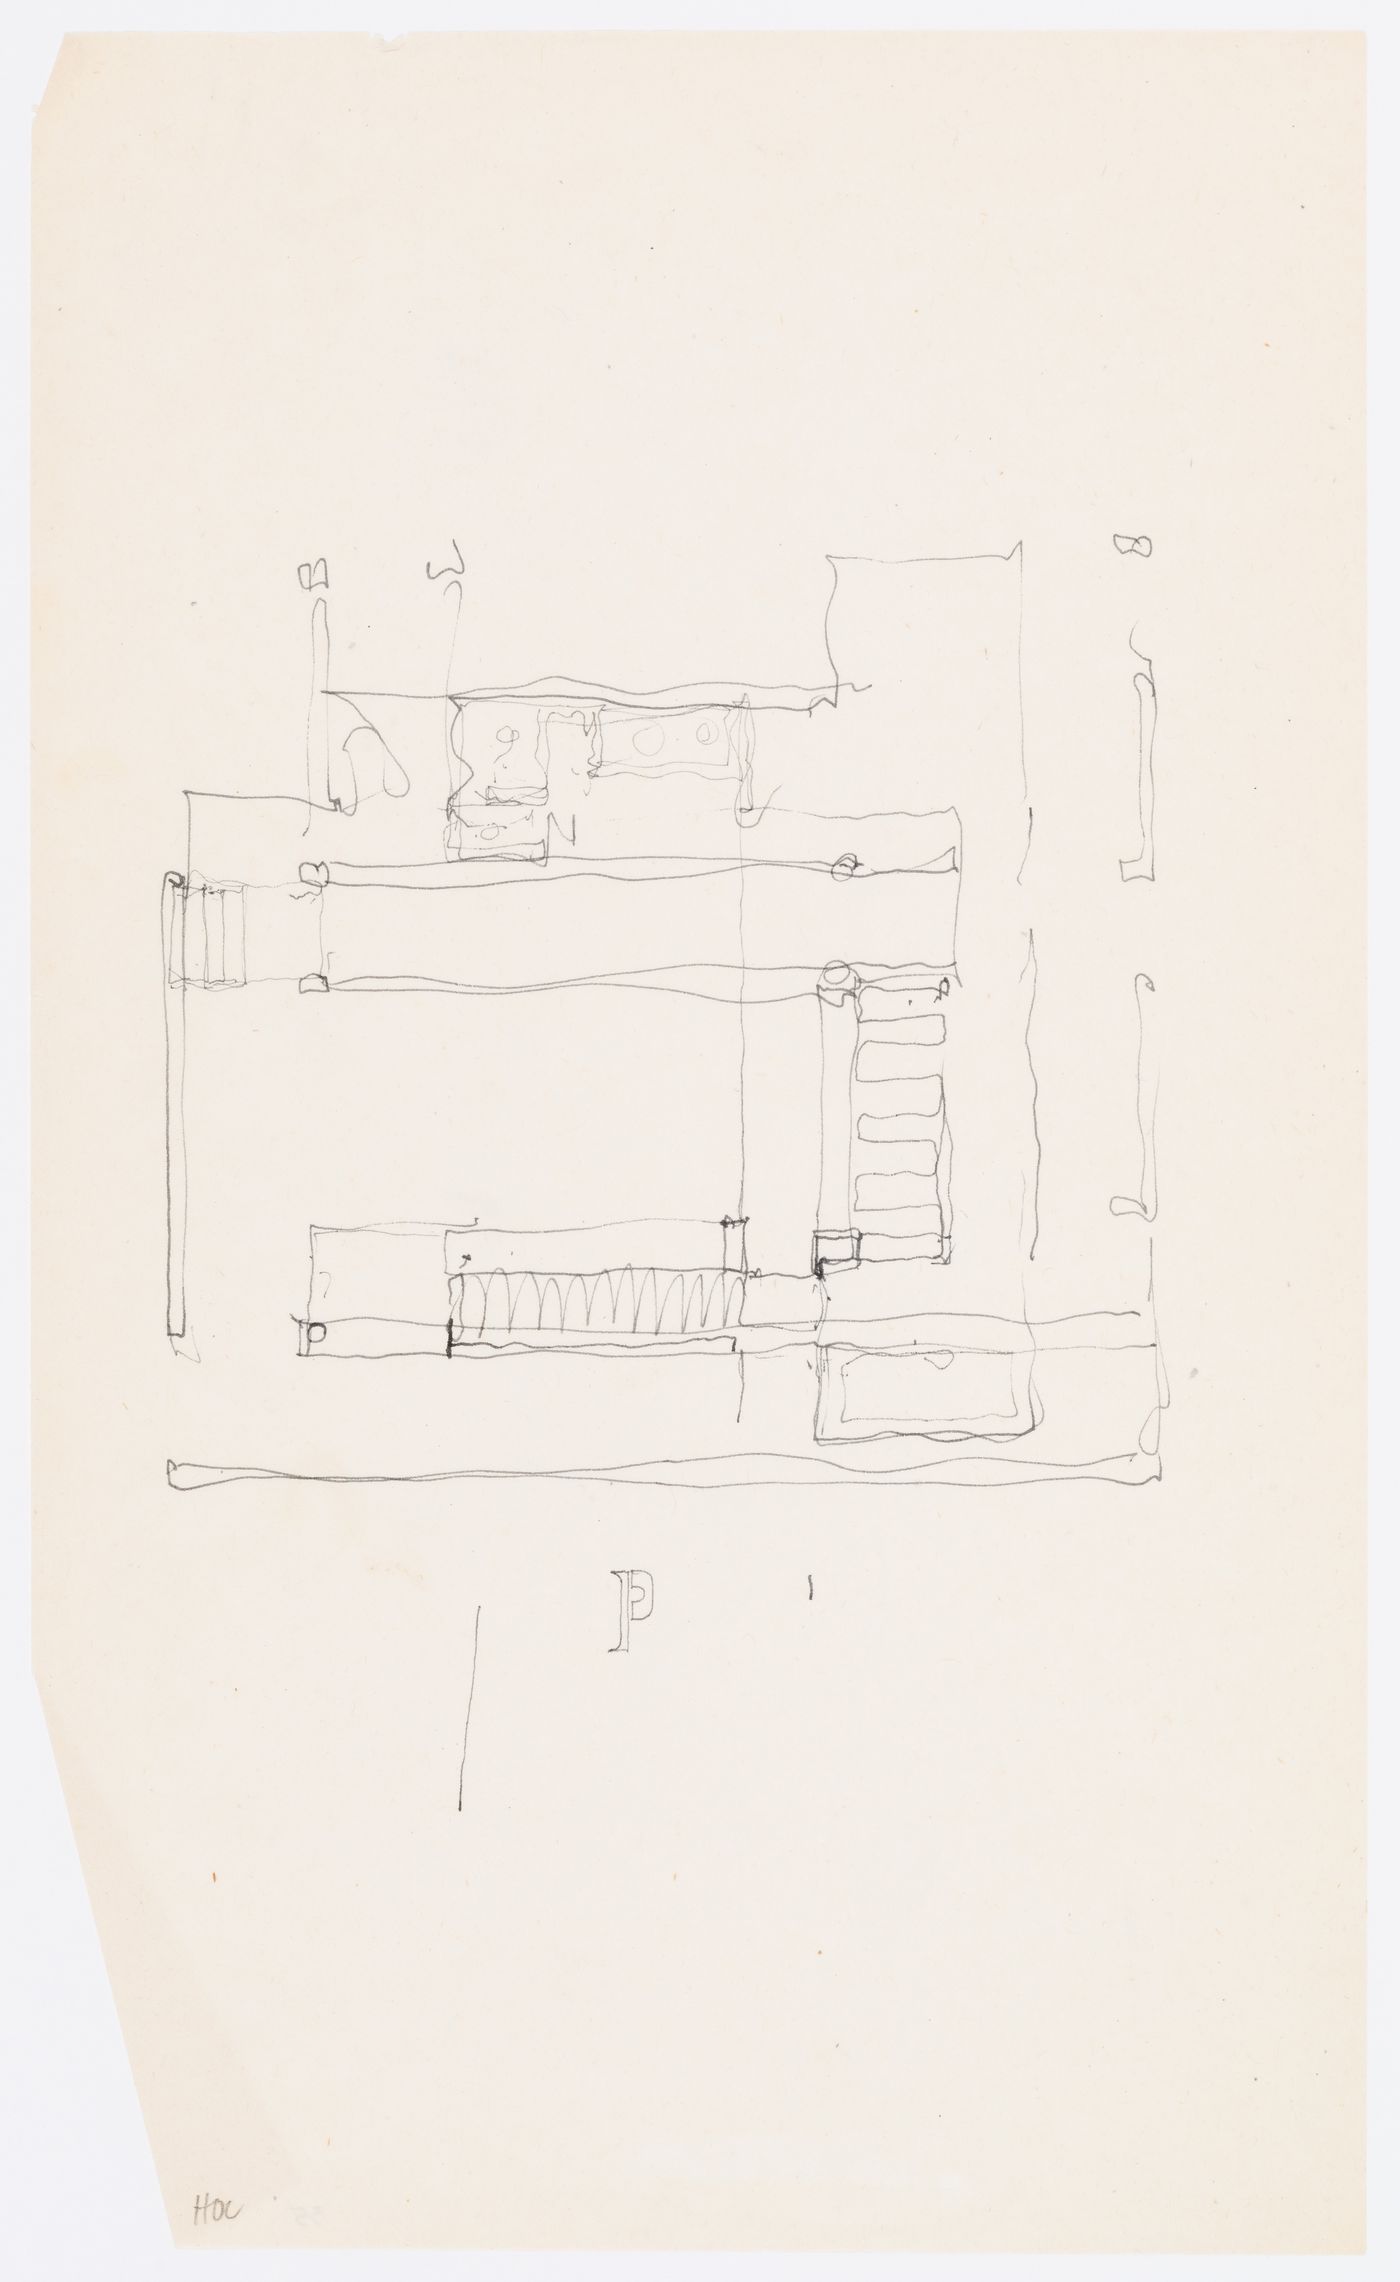 Barenholtz Pavilion (House 1), Princeton, New Jersey: sketch plan